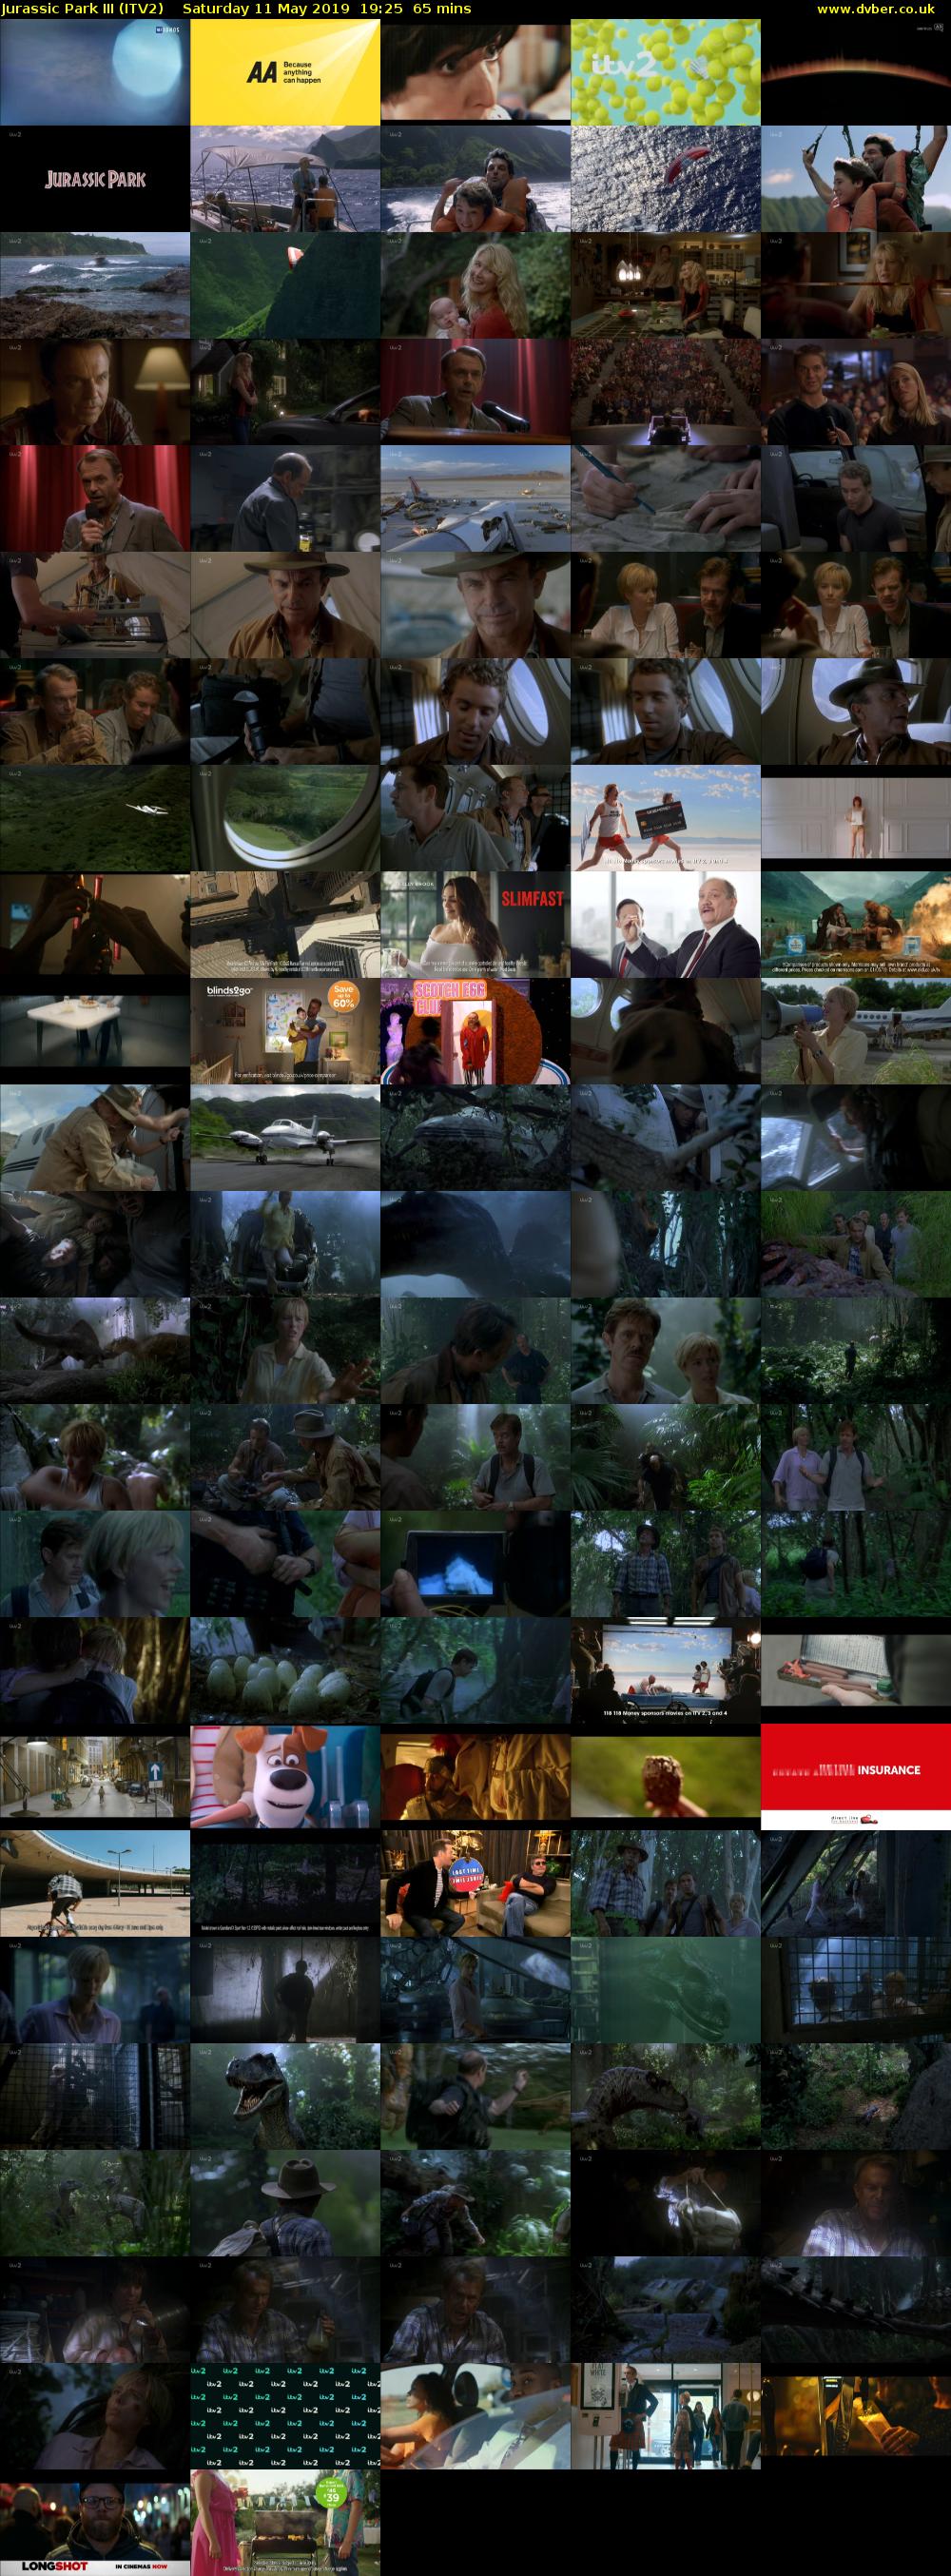 Jurassic Park III (ITV2) Saturday 11 May 2019 19:25 - 20:30